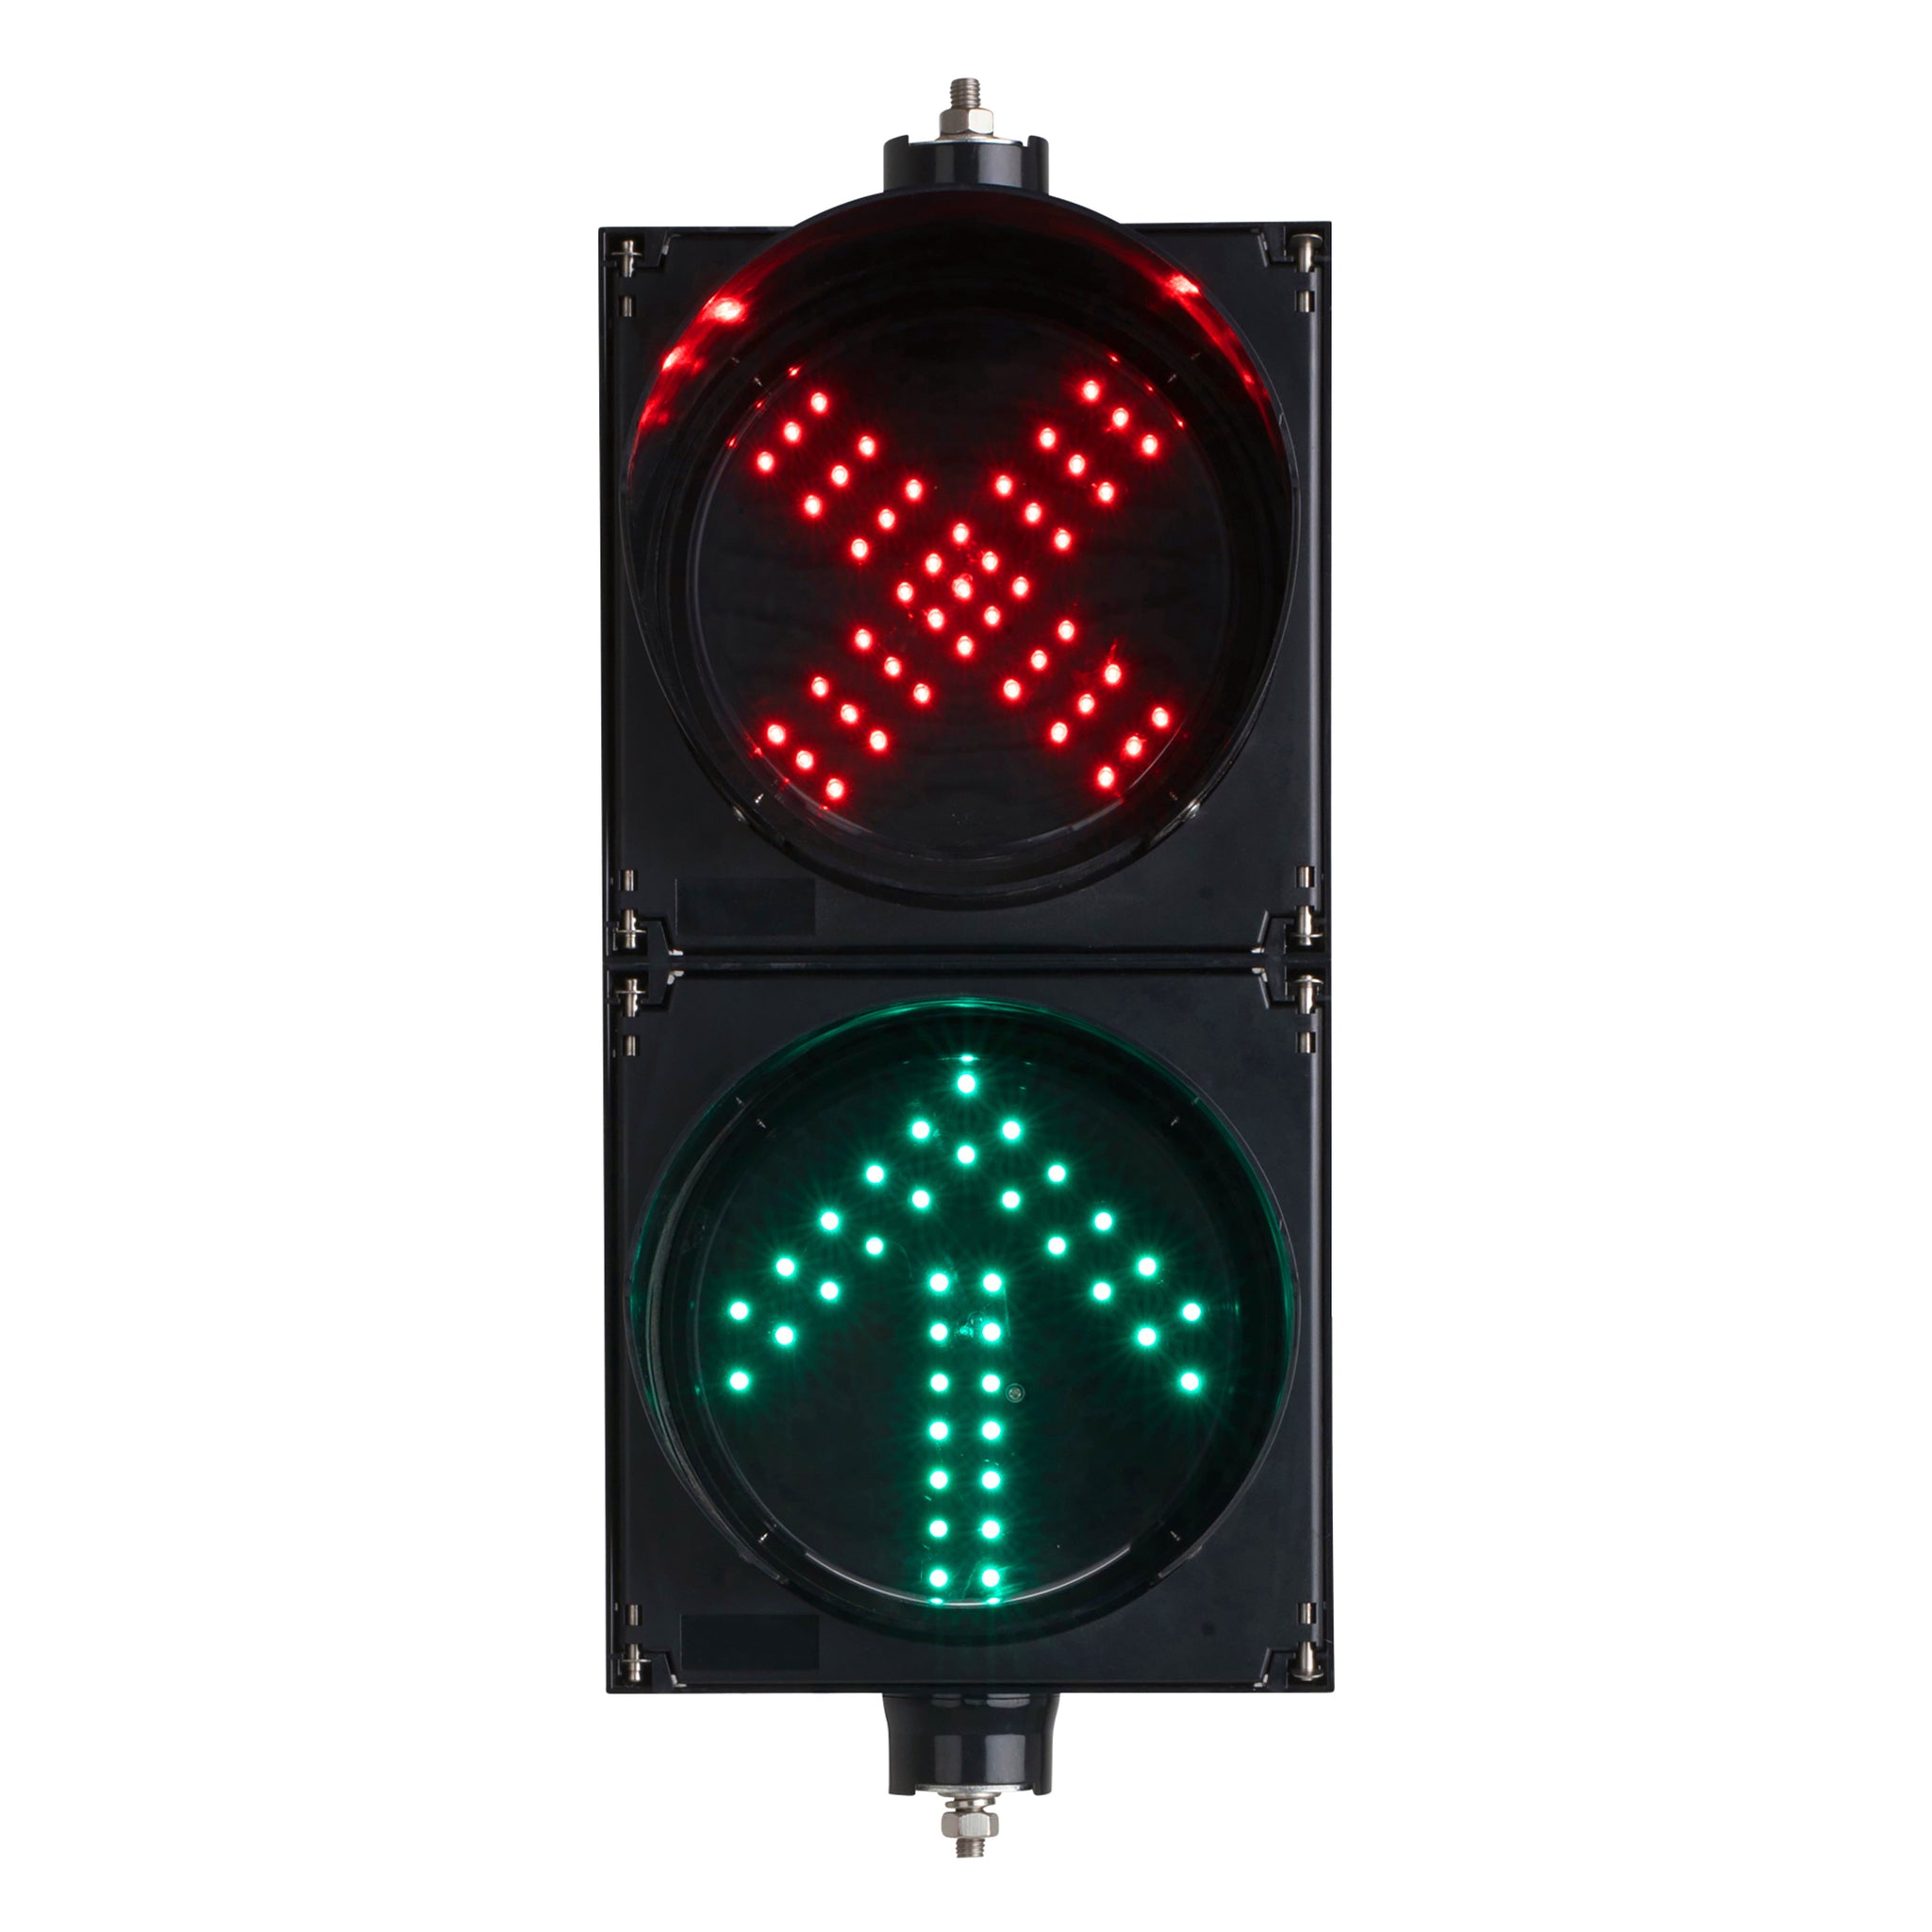 BNR BNR 2 Aspect 200mm Lane Control LED Traffic Lights 12-24VDC or 85-265VAC - Red X & Green Arrow - BNR Industrial